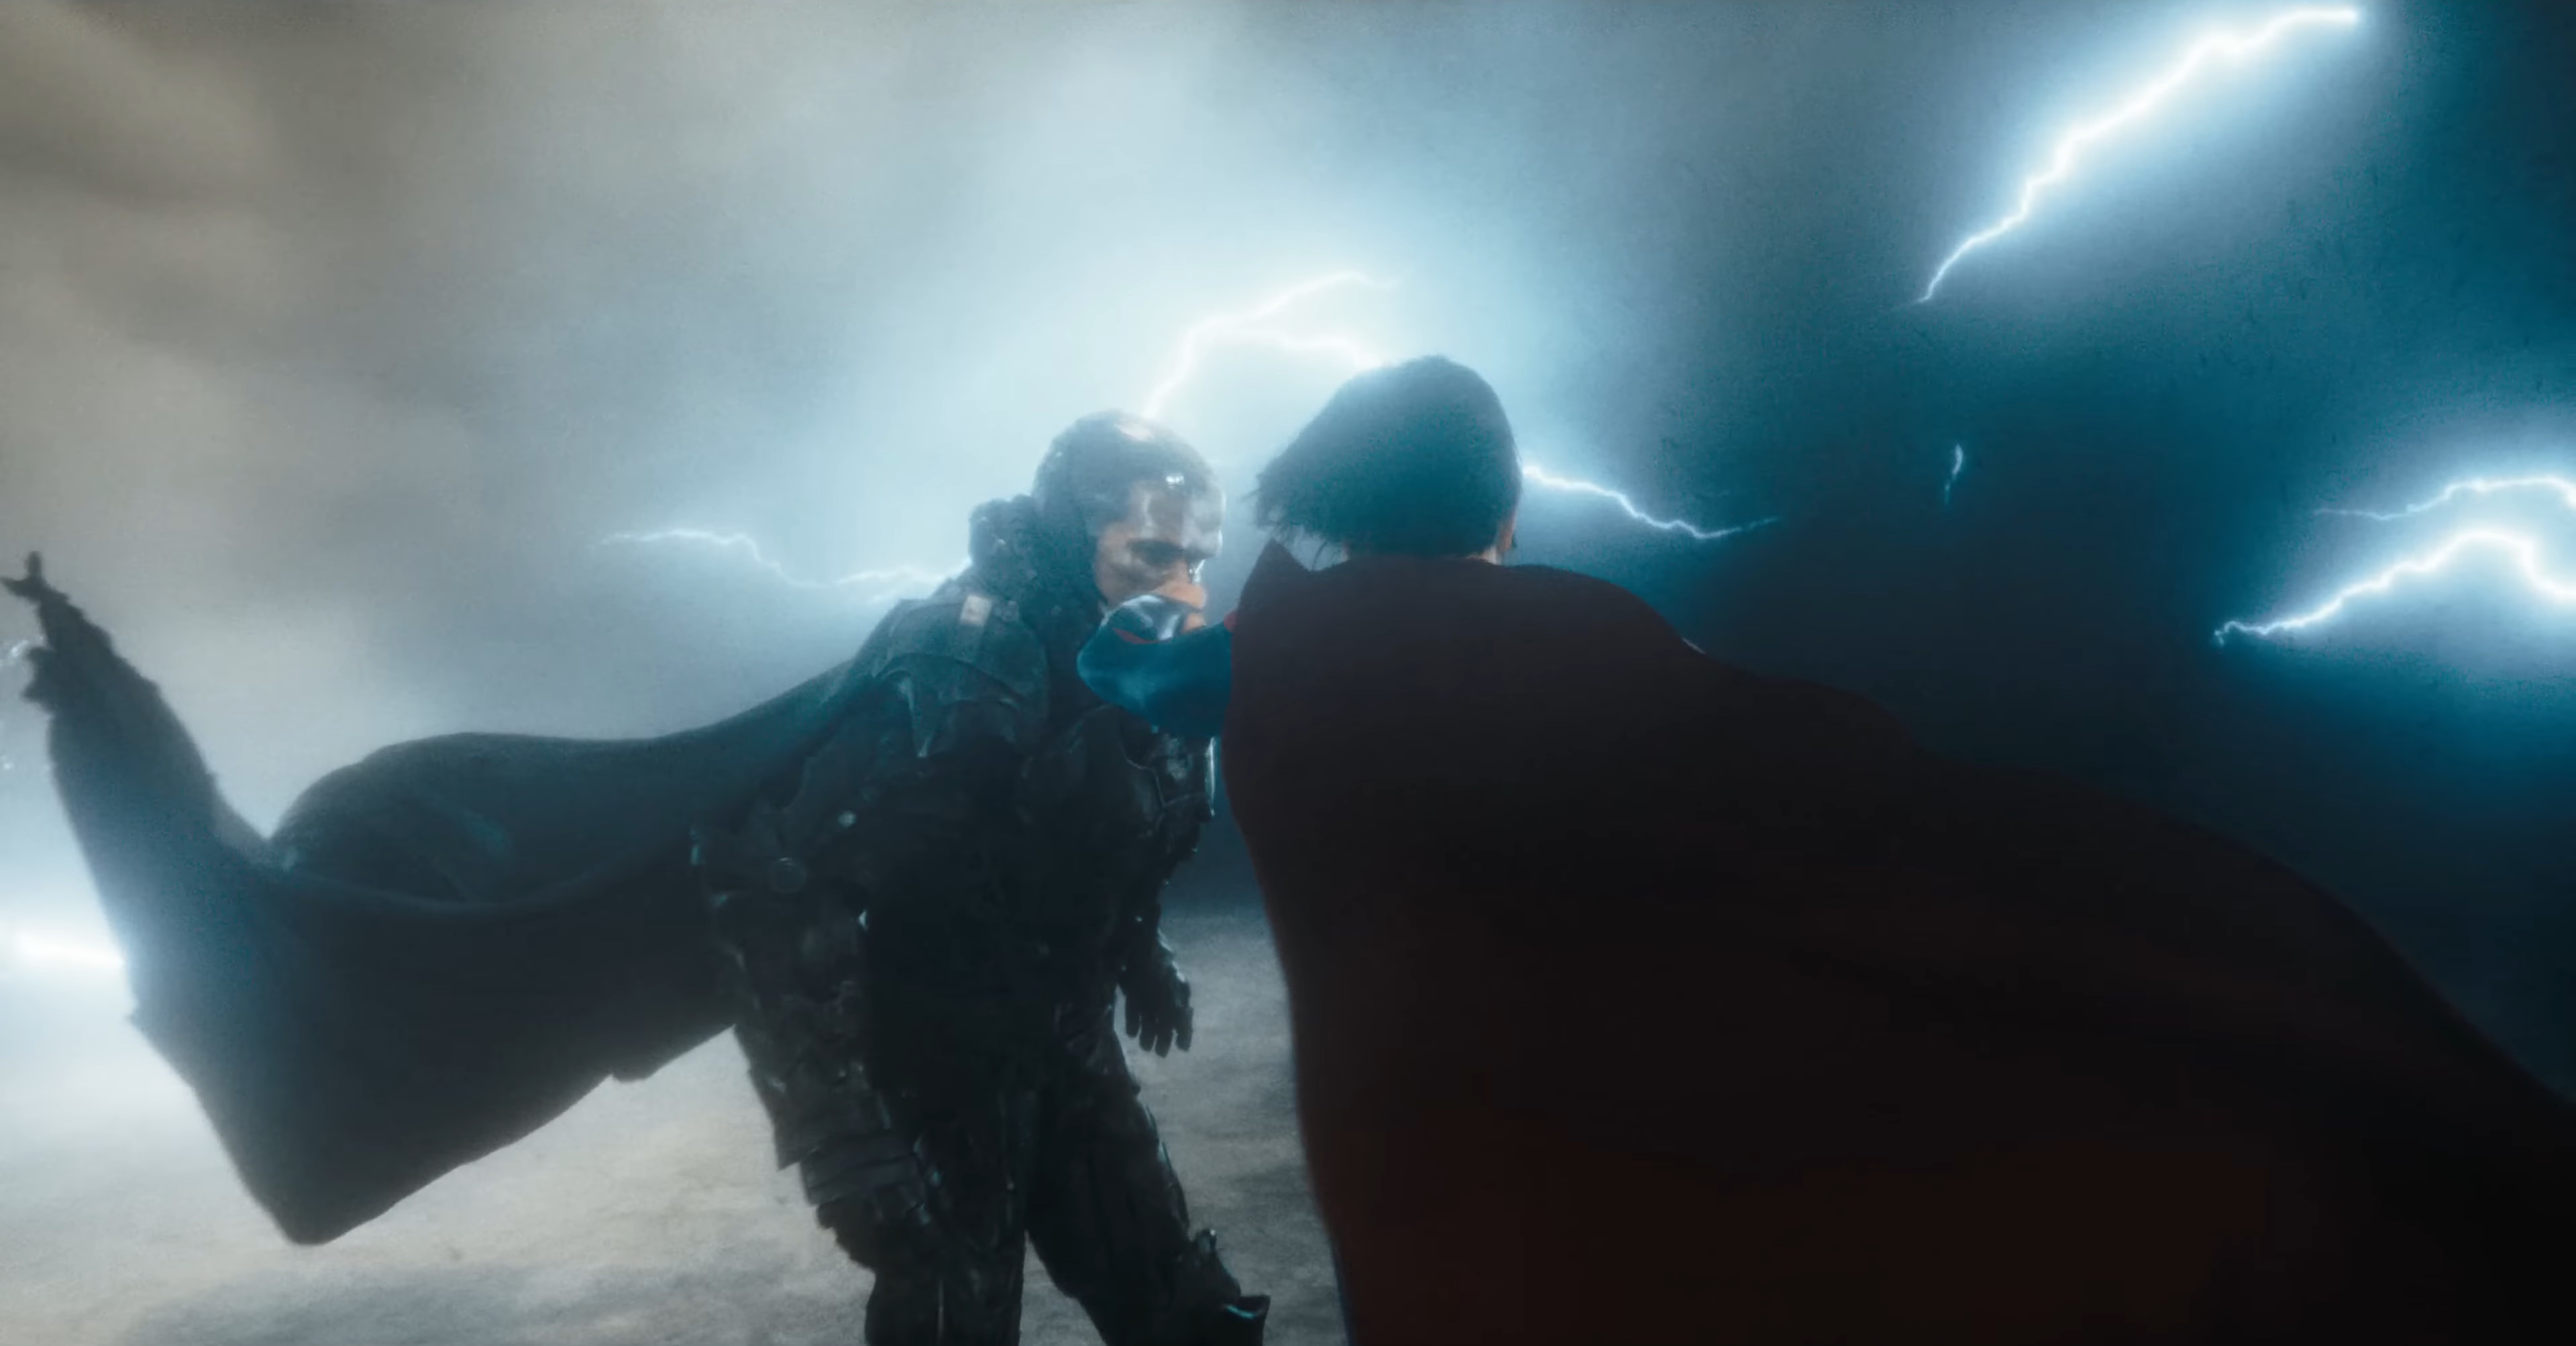 Supergirl socando Zod em "The Flash".